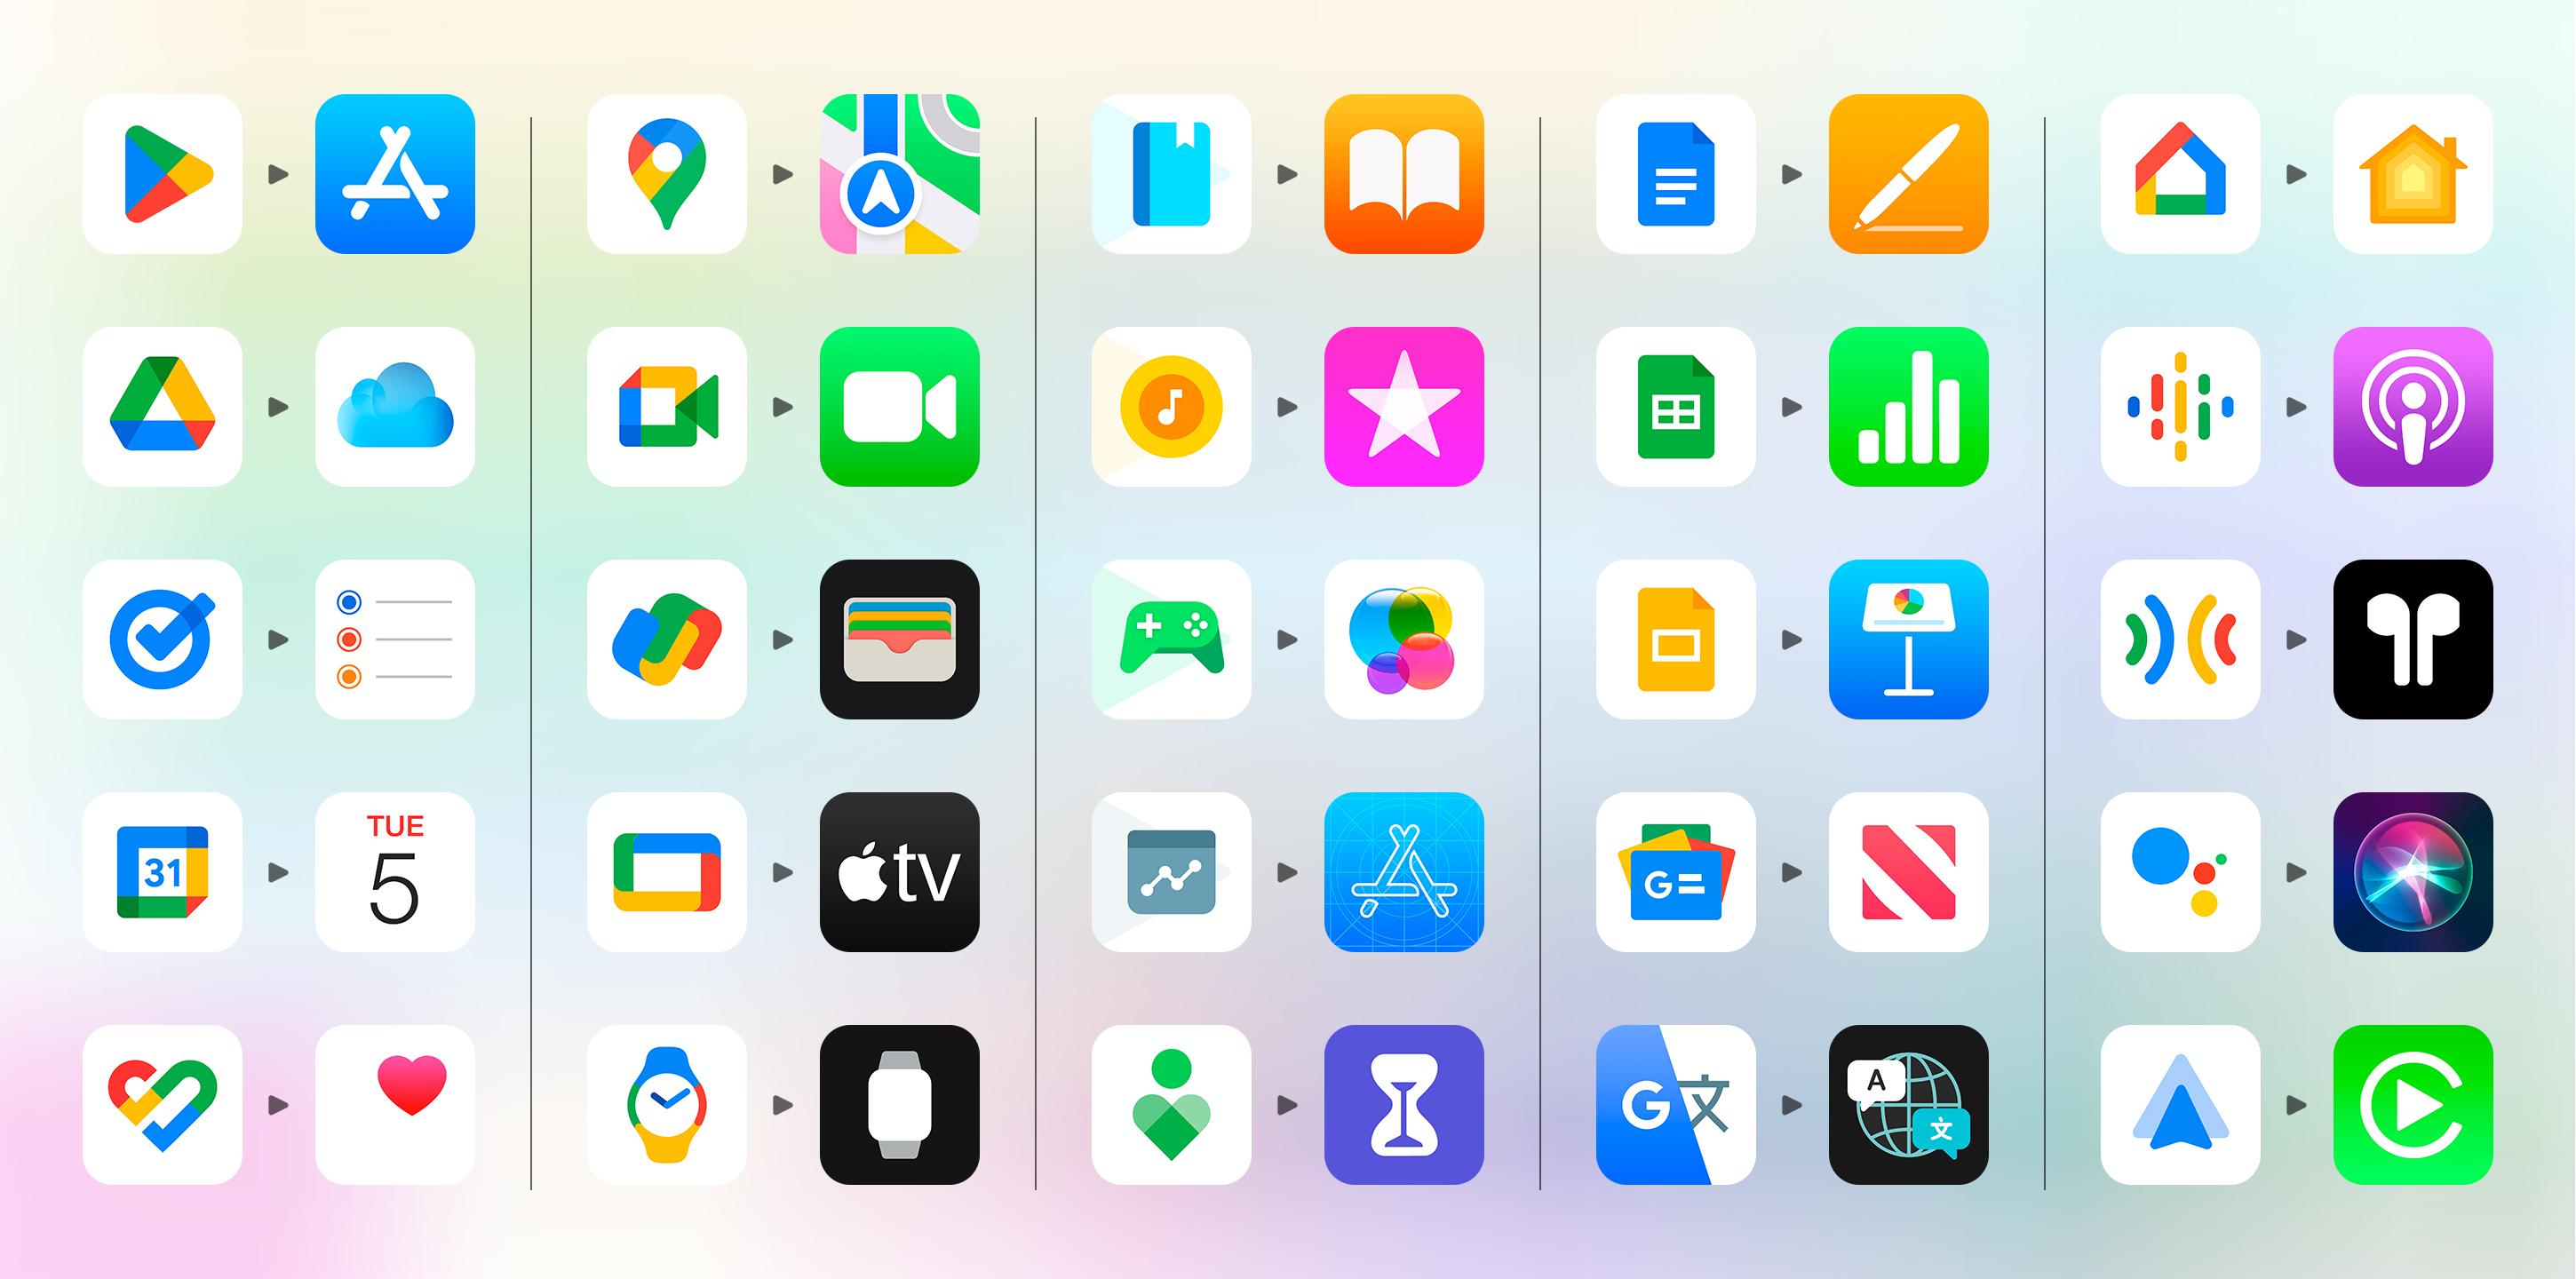 IOS 17 icons. IOS Bubble. IPEAR. Icon 17